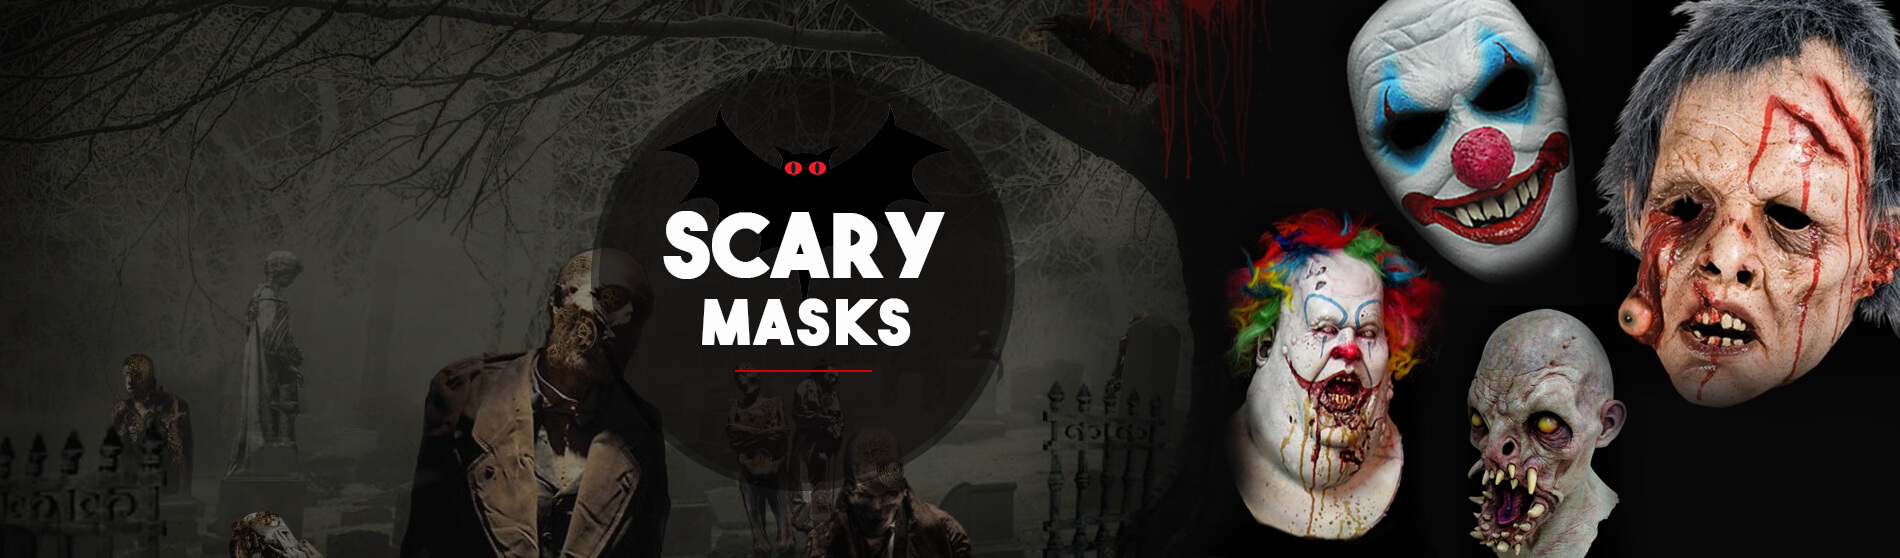 Glendale Halloween : Scary Masks